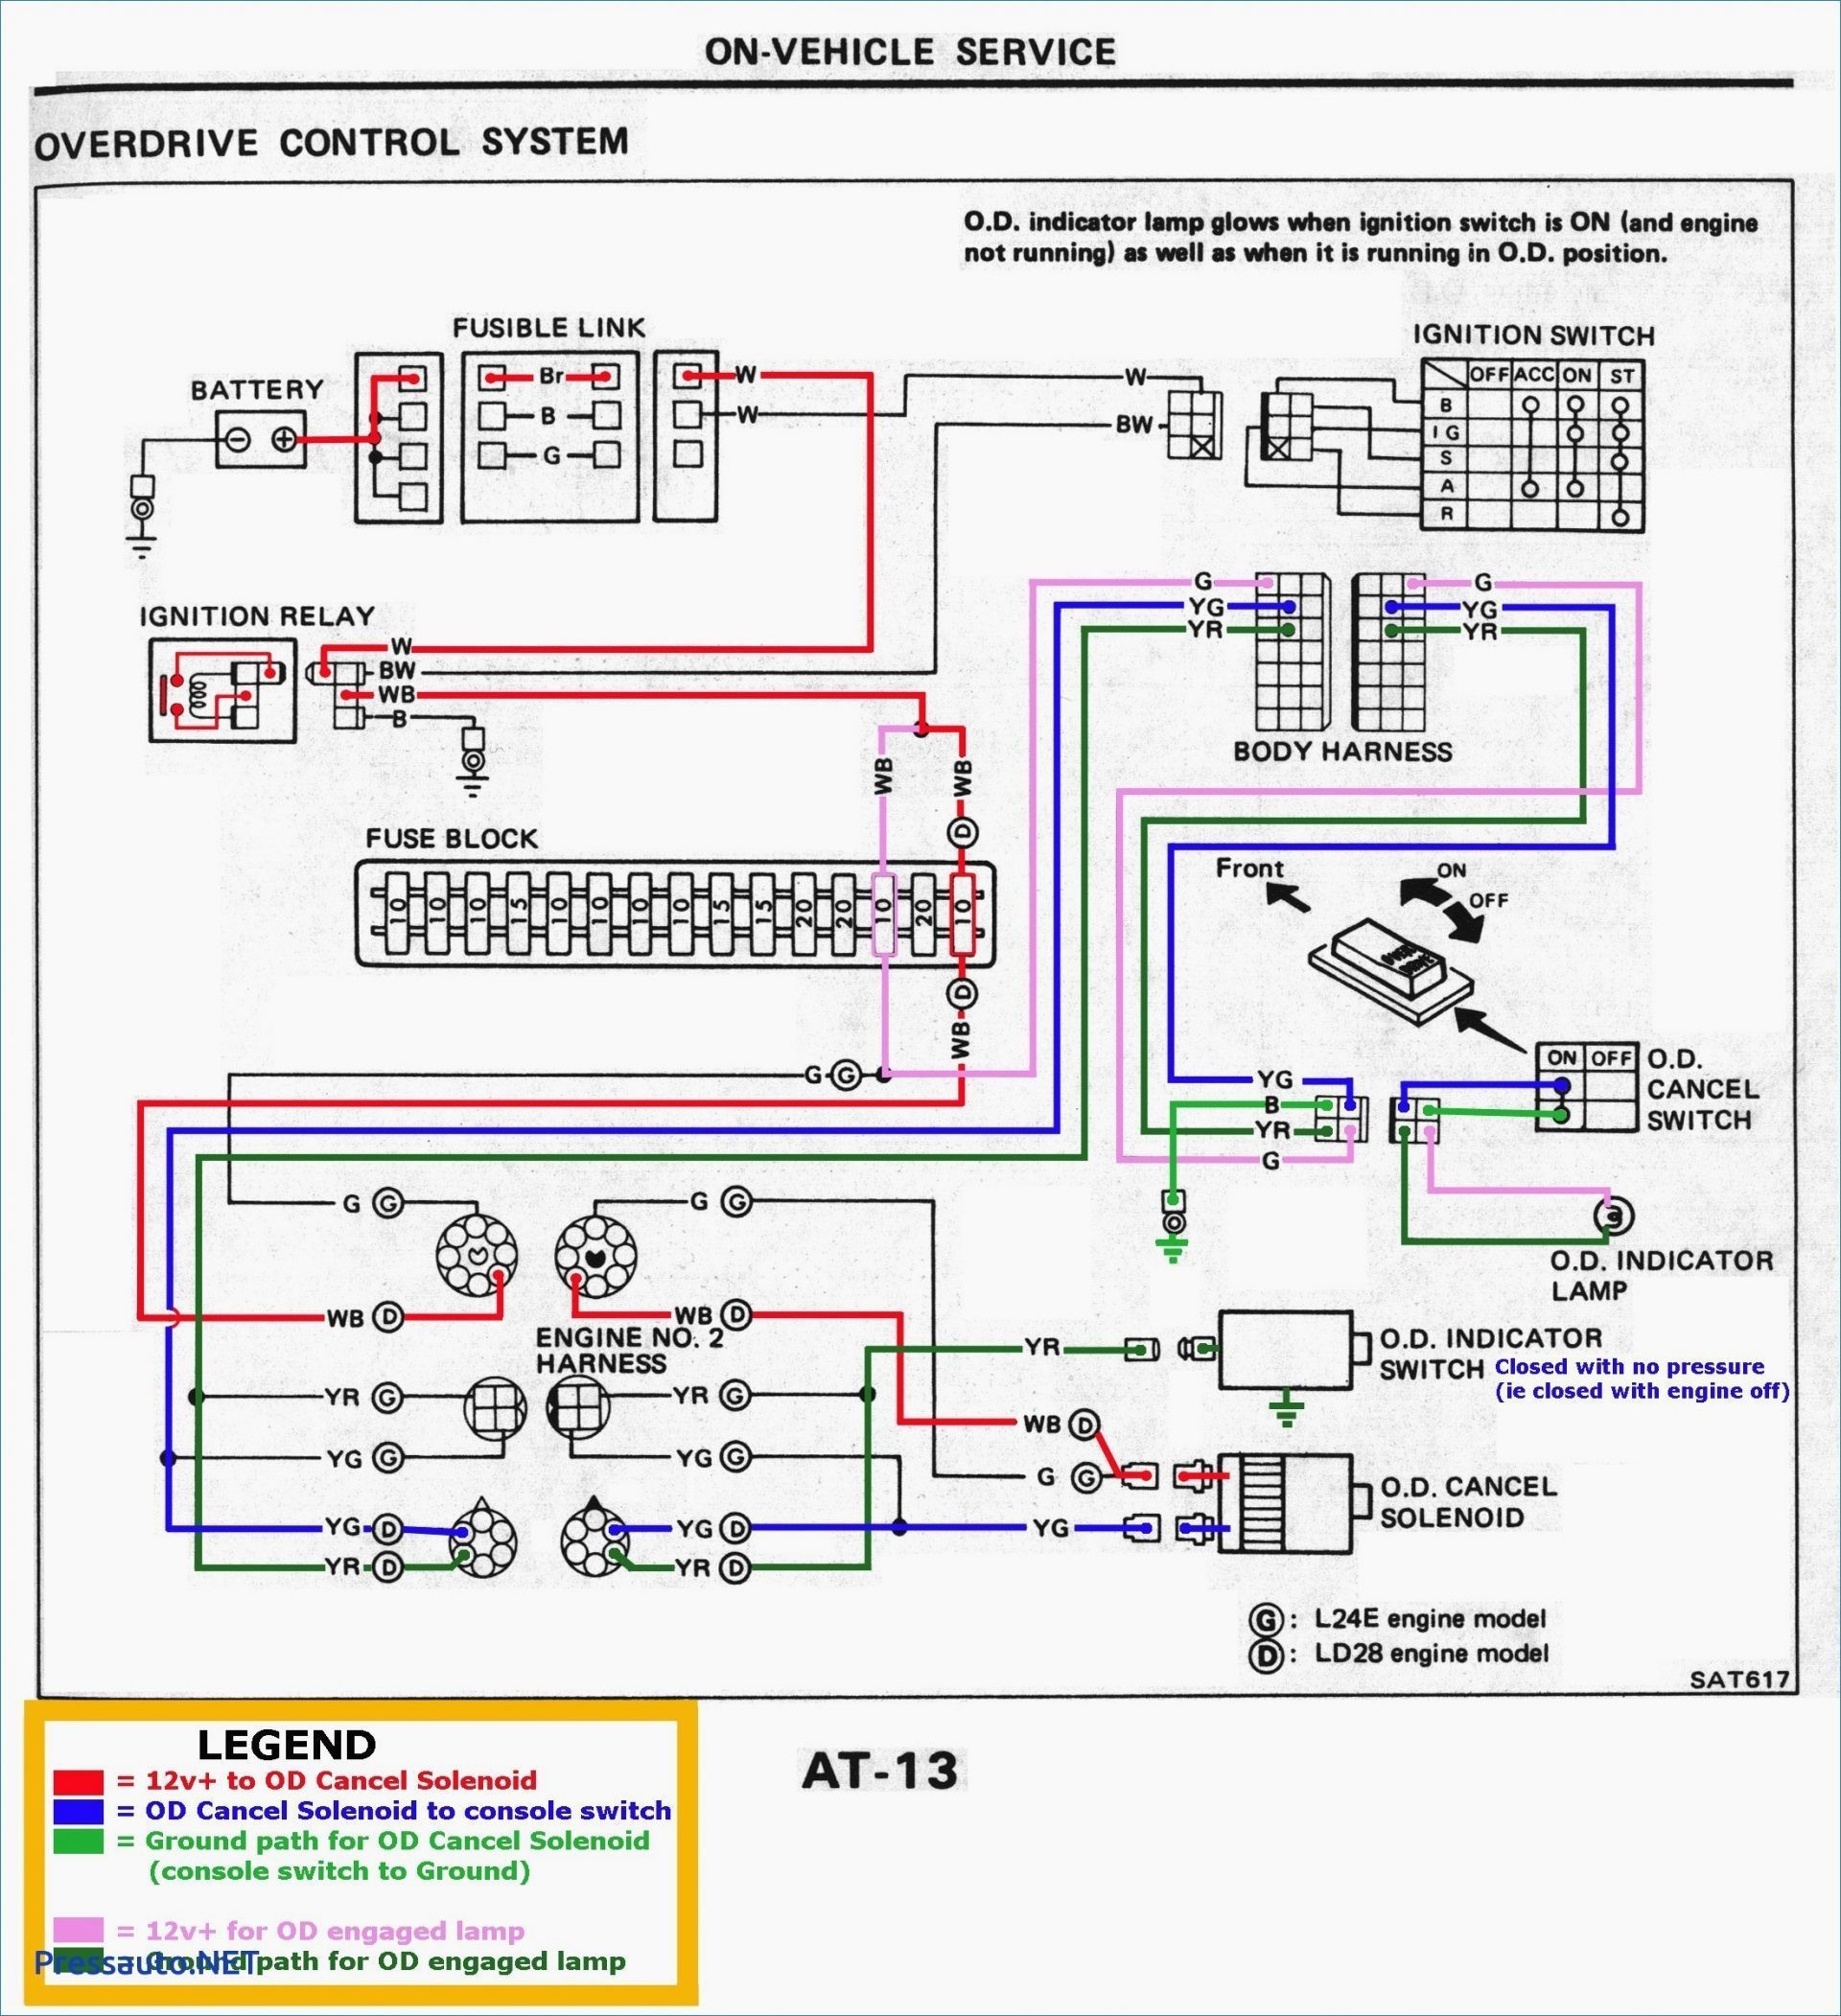 Circuit Breaker Panel Wiring Diagram Pdf Electrical Circuit Wiring Diagram For House Lighting Circuit Pdf Fresh Wiring Diagram